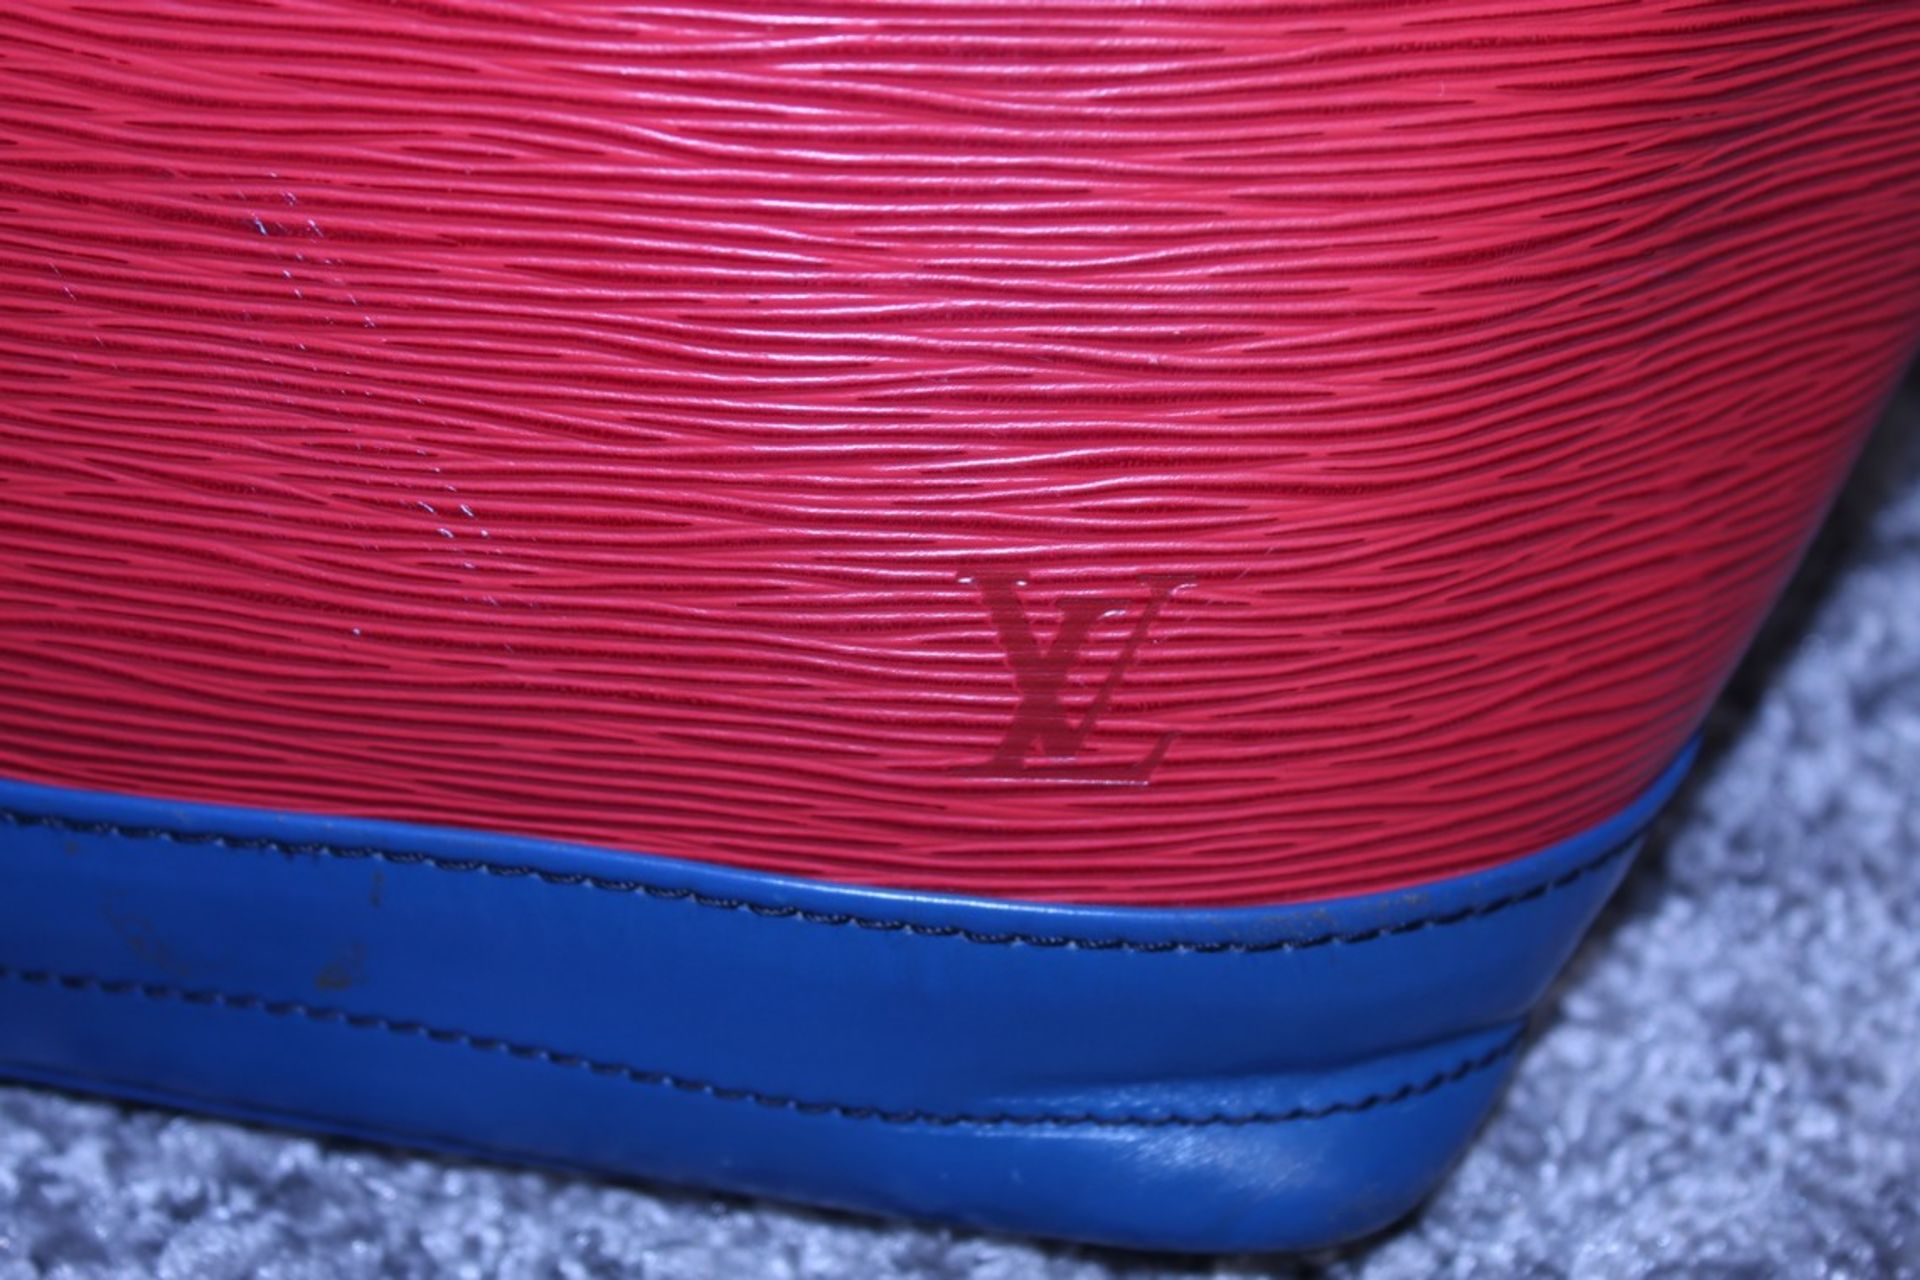 Rrp £1,200 Noe Tricolor Shoulder Bag, Red/Blue/Green Epi Claf Leather With Black Stitching - Image 3 of 4